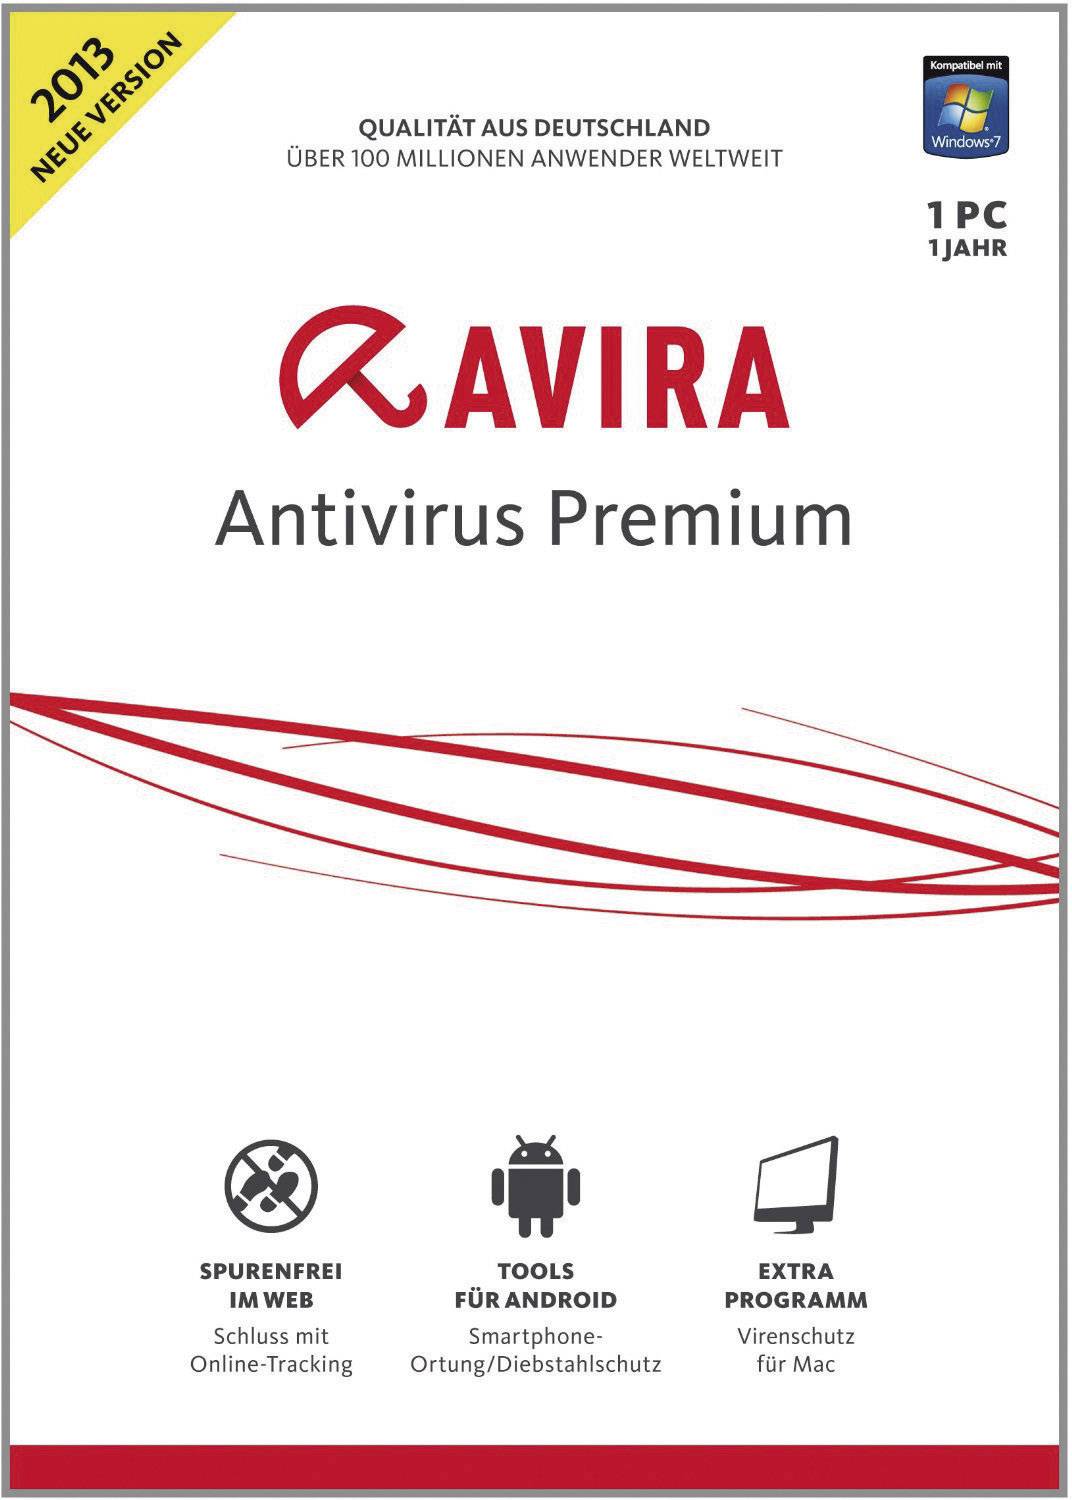 Avira antivirus prime quality with keygen